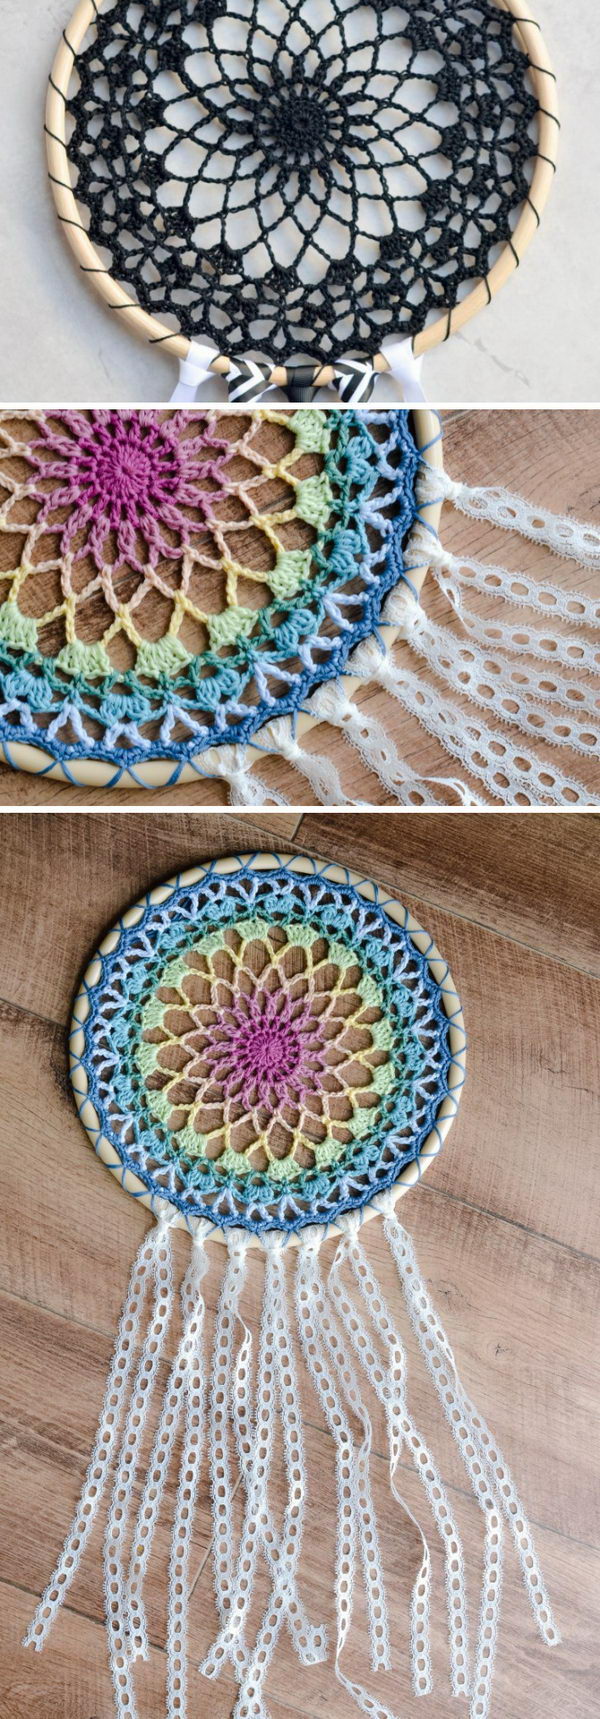 15-crochet-dream-catcher-patterns-and-tutorials-2017